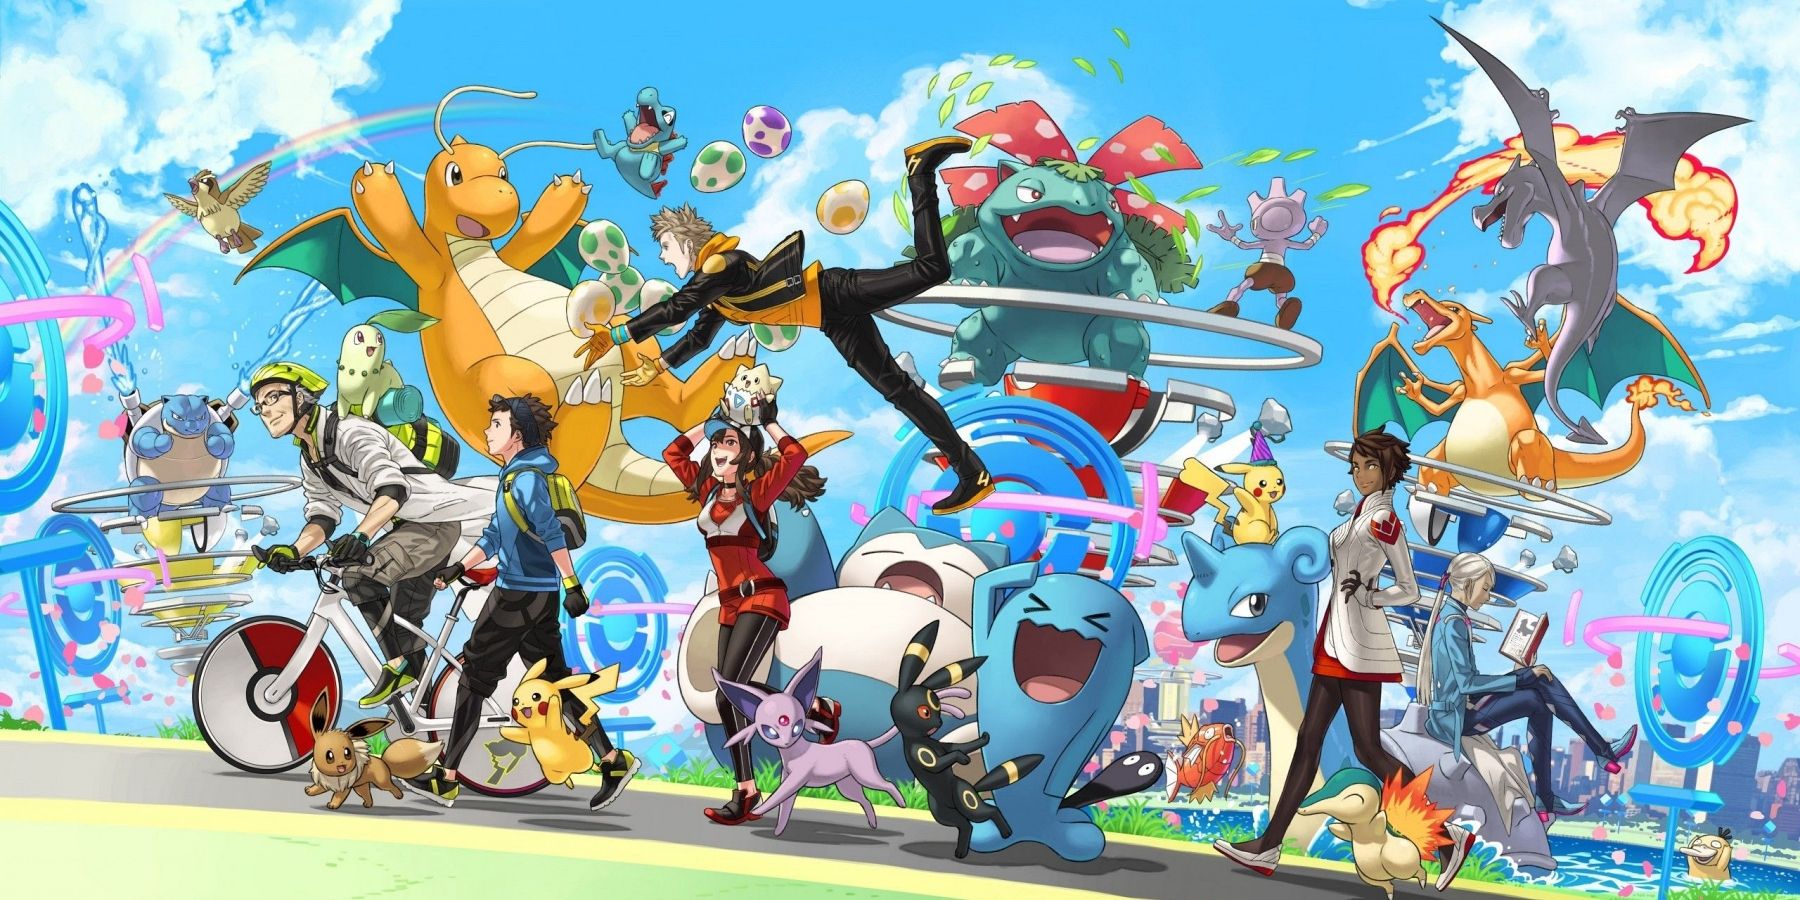 Pokemon GO Announces New Event With Gen 7 Pokemon Debut